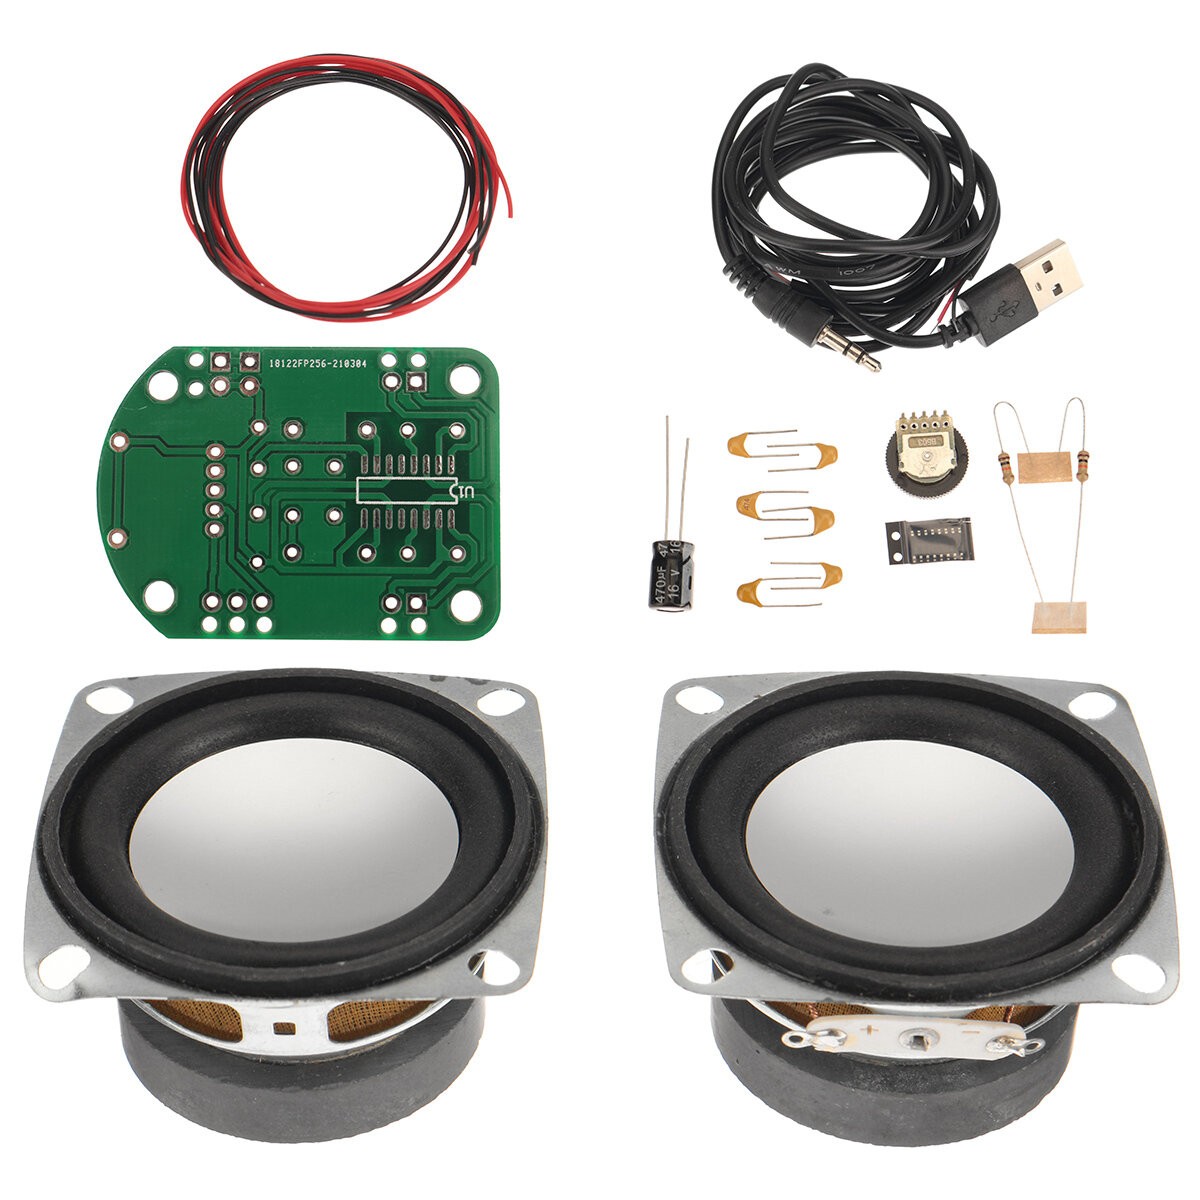 EQKIT 3W Power Amplifier Kit Amplifier Production DIY kit Small Speaker Parts Electronic Production 